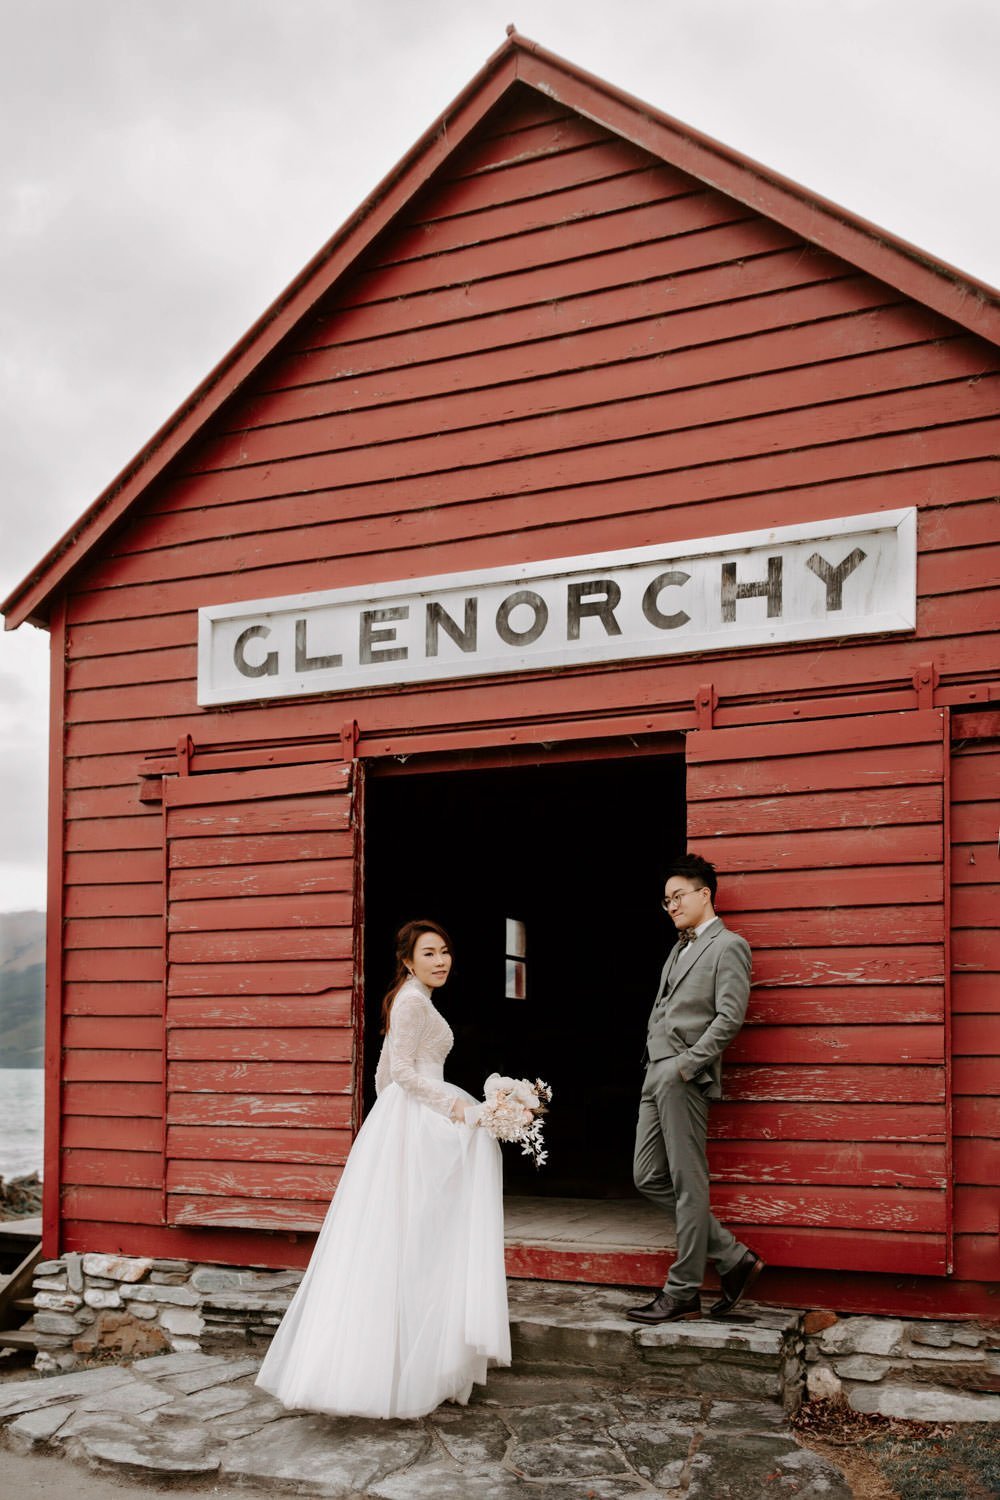 pre+wedding+elopement+photographer+Panda+Bay+Films+queenstown+glenorchy+mt+cook+tekapo+pukaki+cc-3.jpeg